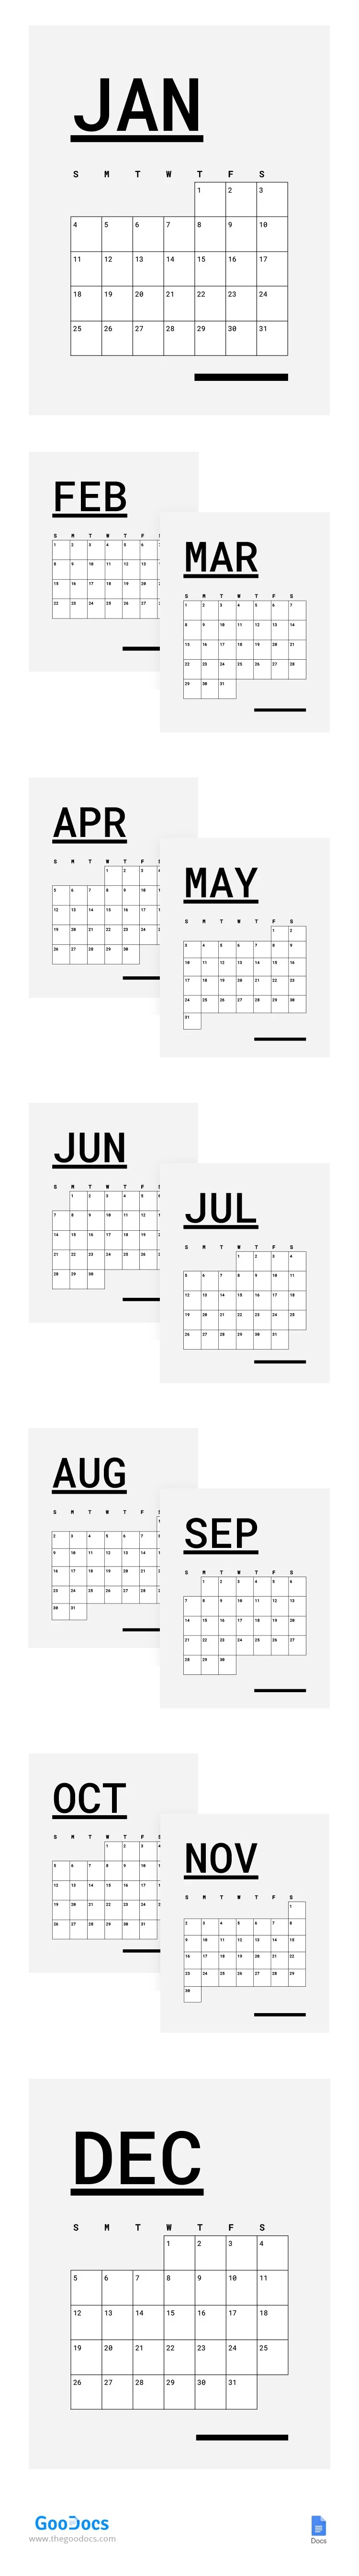 Grey Simple Calendar - free Google Docs Template - 10062423